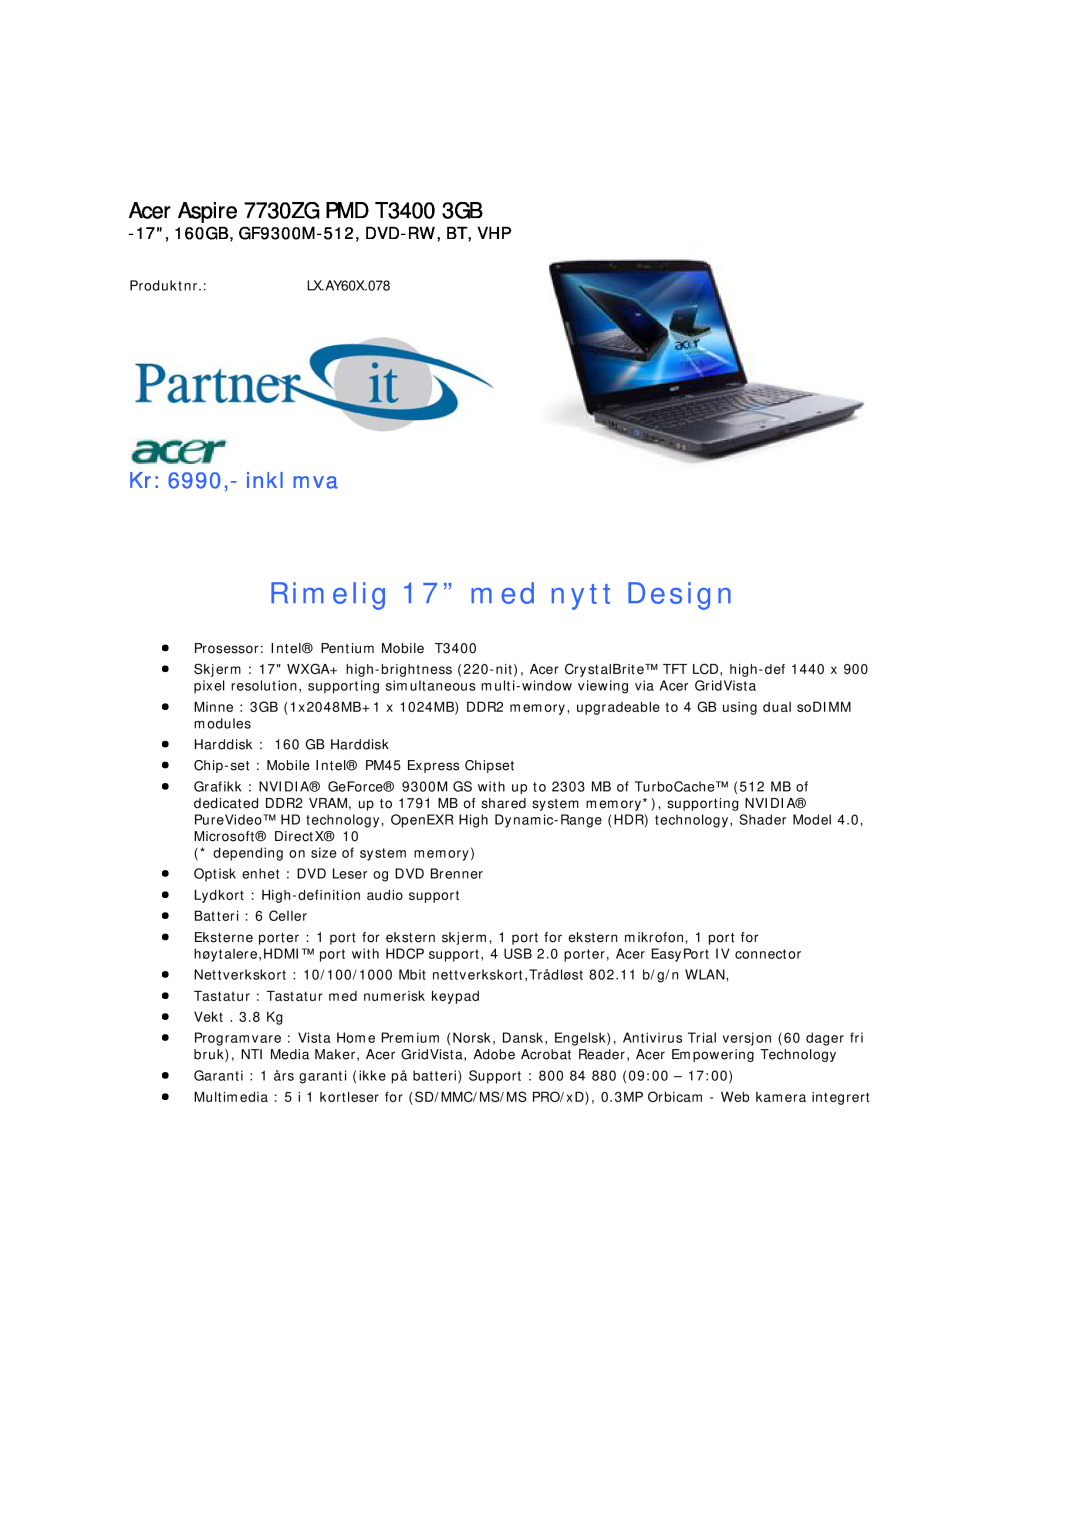 Acer 5735Z PMD T3400 Acer Aspire 7730ZG PMD T3400 3GB, 17, 160GB, GF9300M-512, DVD-RW, BT, VHP, Produktnr.LX.AY60X.078 